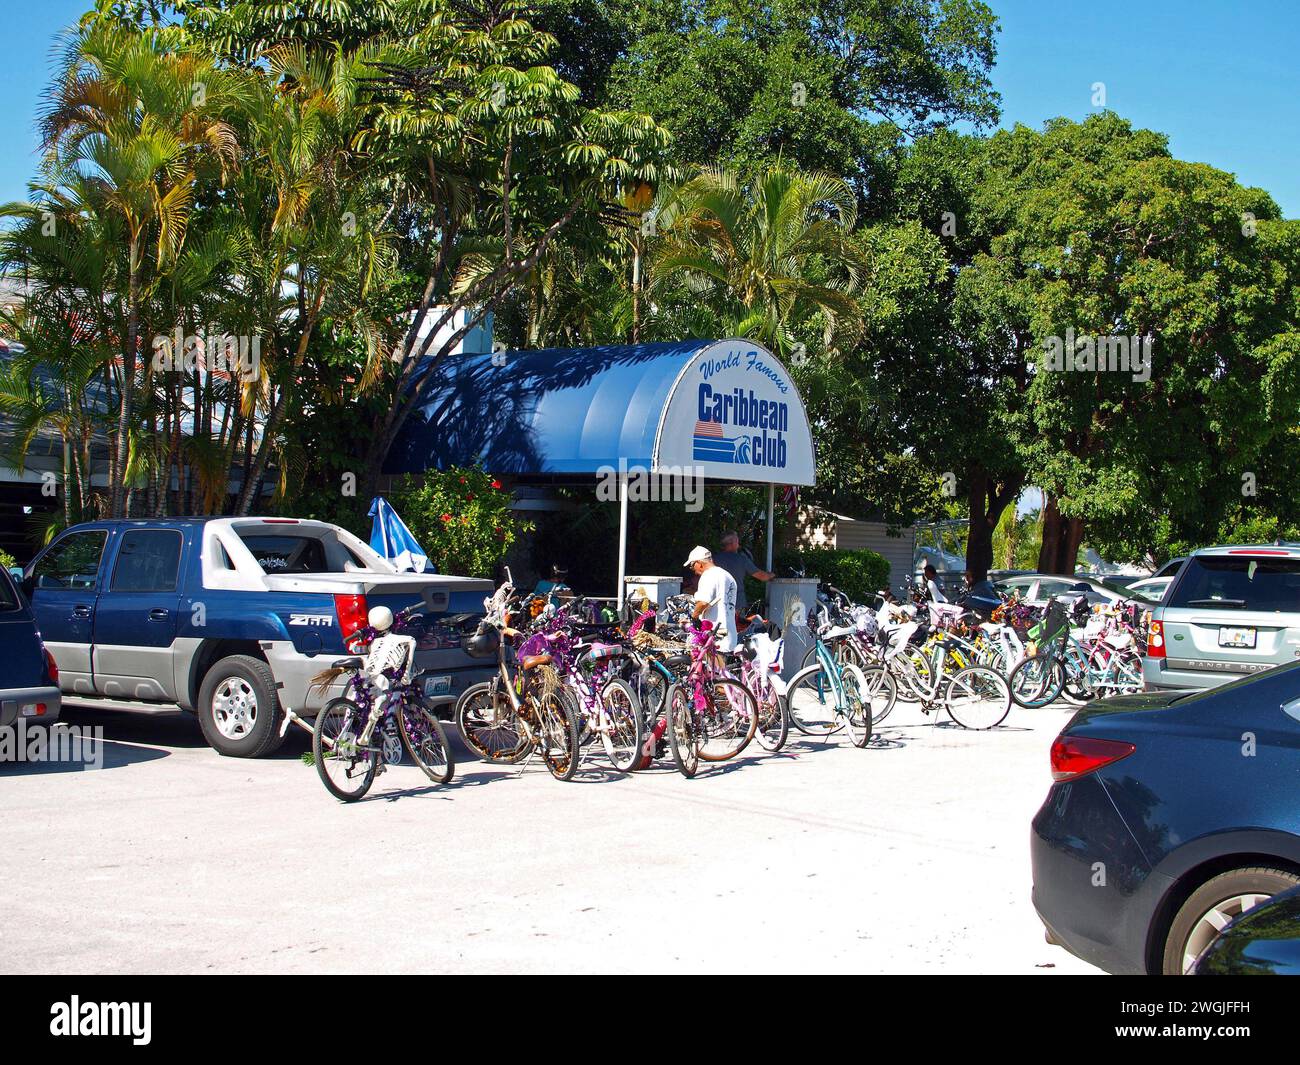 Key Largo, Florida, United States - April 21, 2015: The famous Caribbean Club used as set in the movie Key Largo. Stock Photo